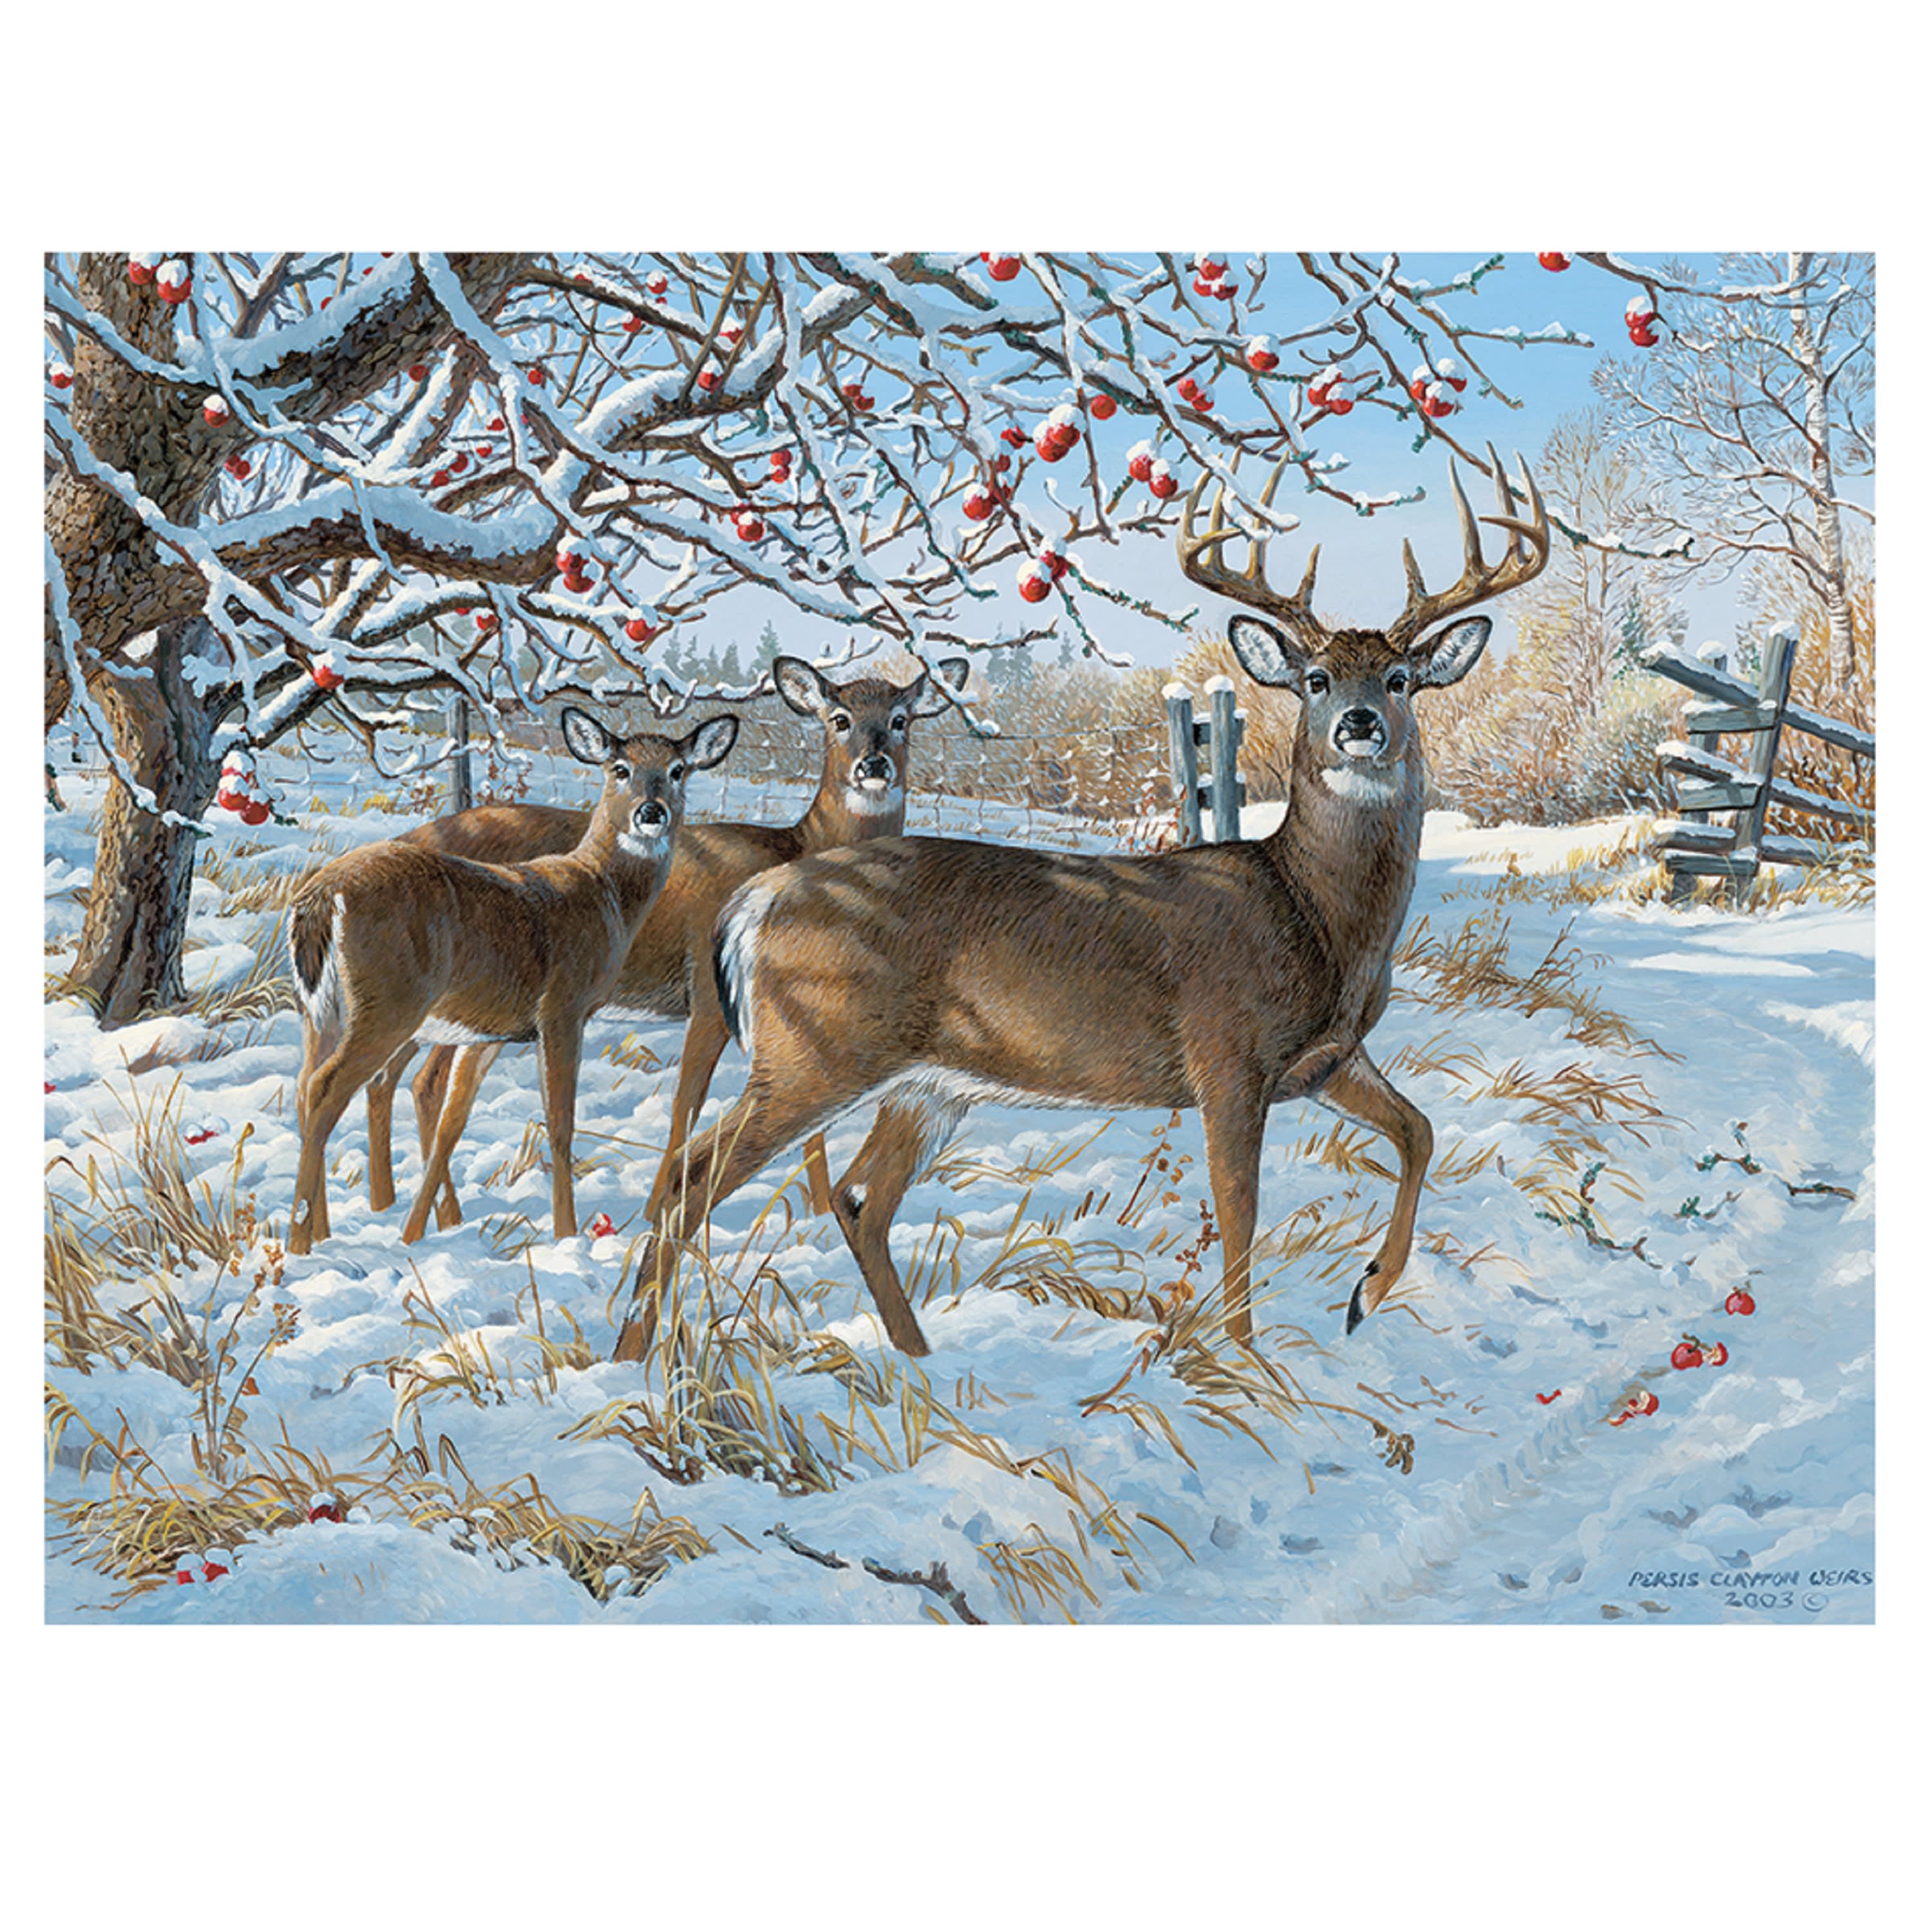 Cobble Hill Winter Deer Puzzle - 500 Pieces